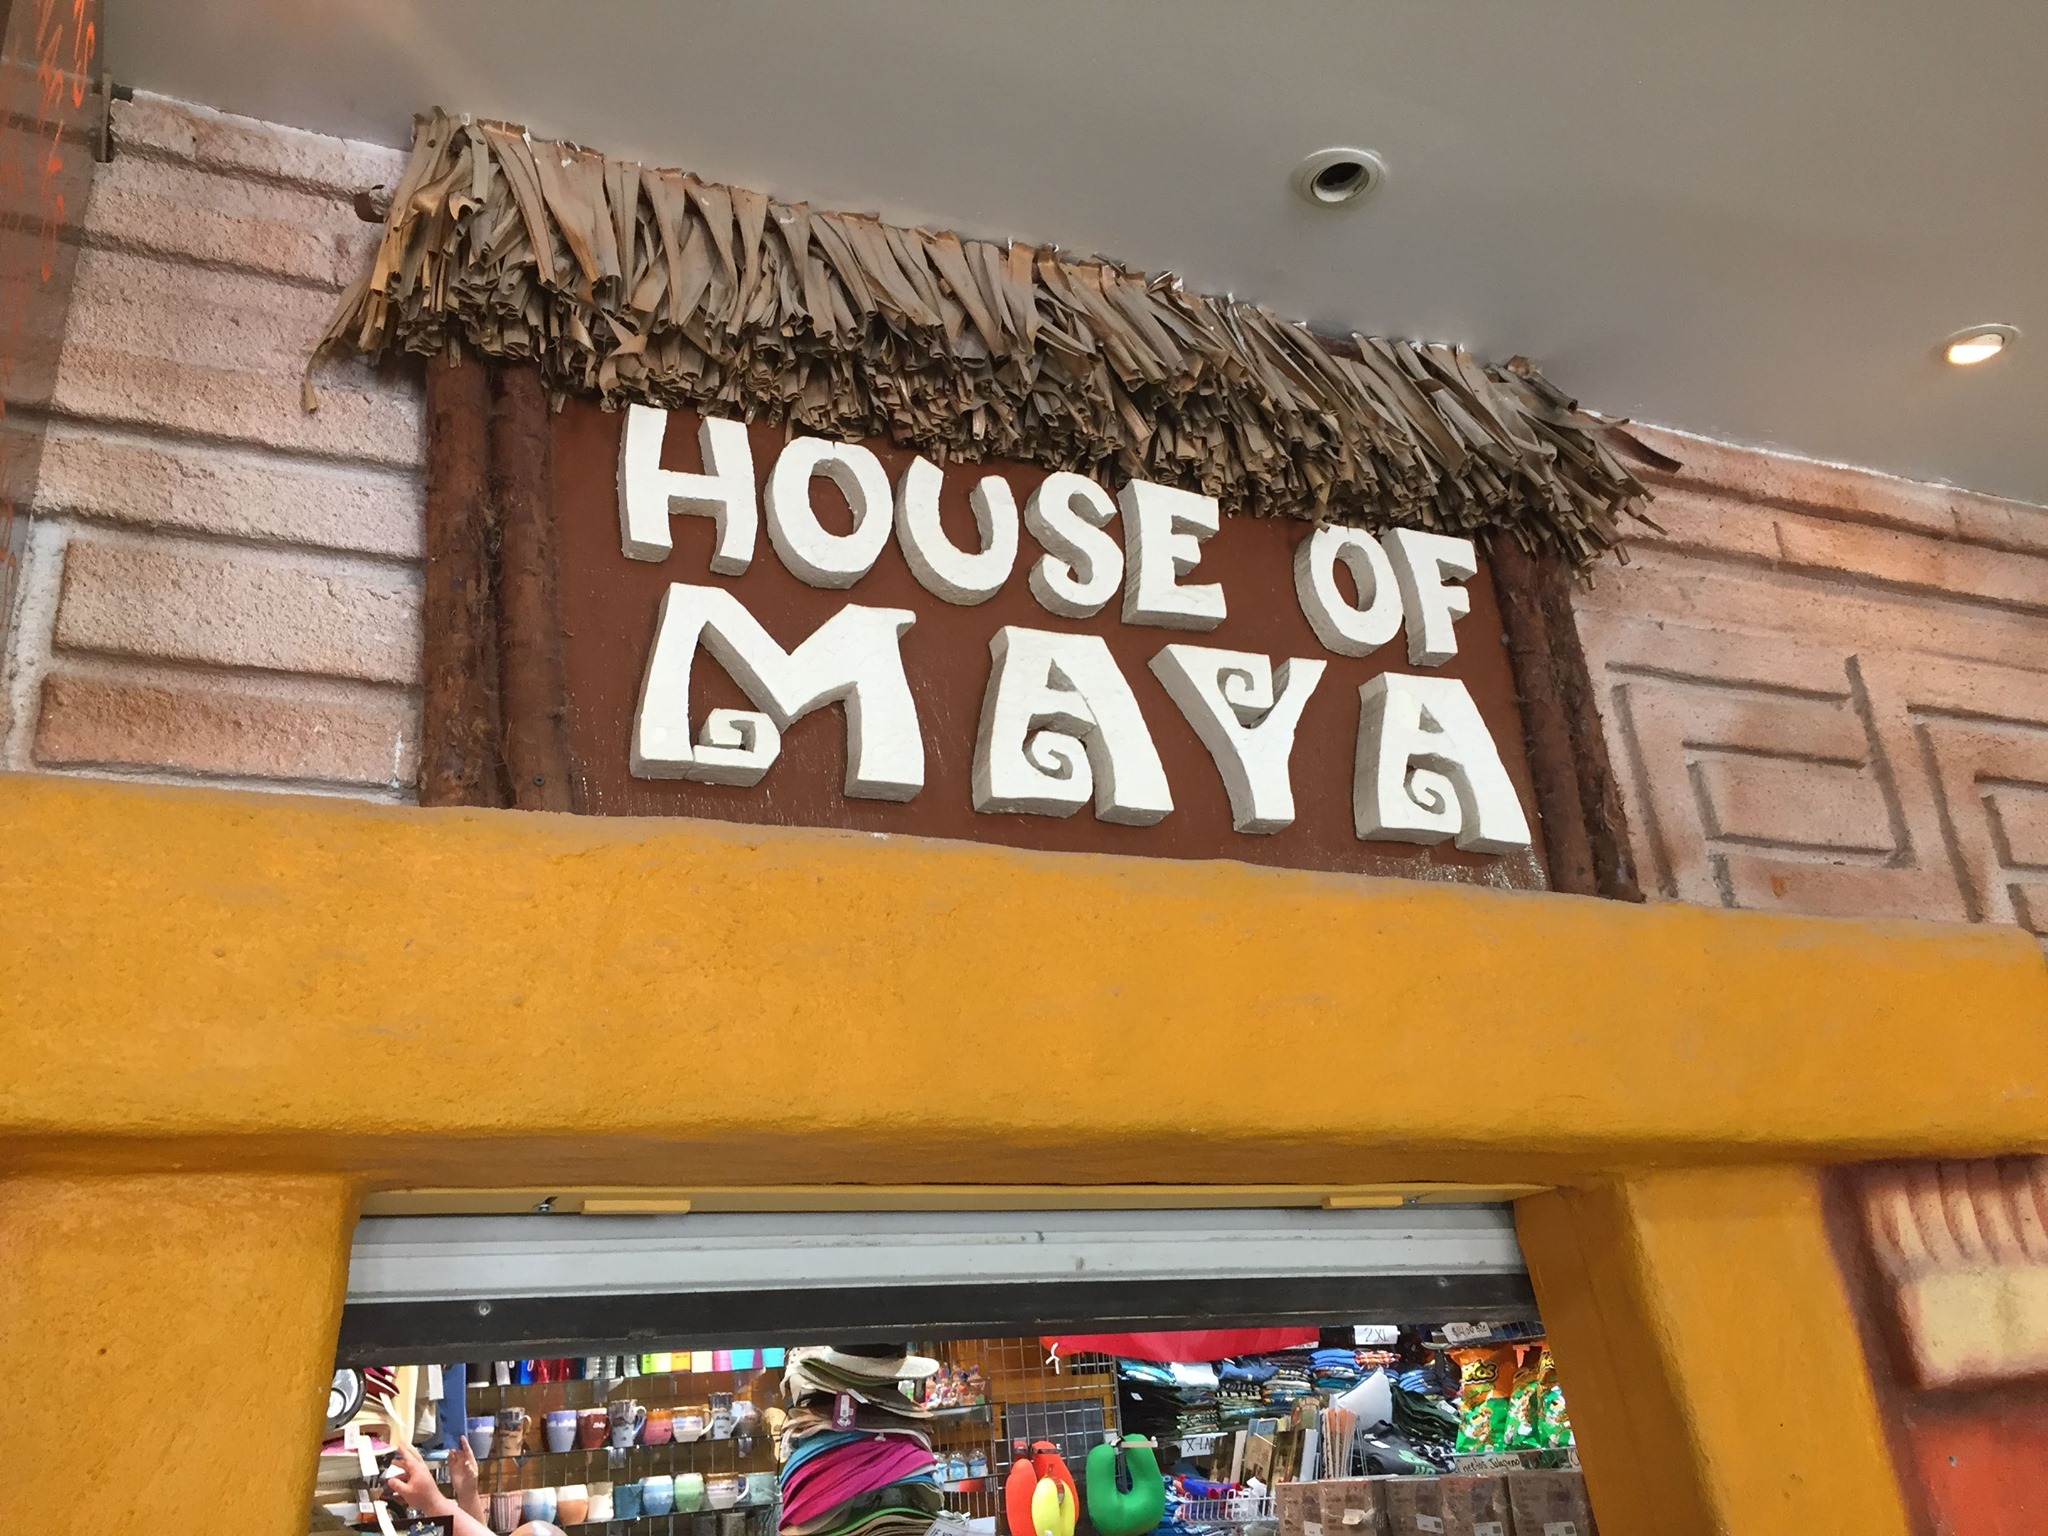 House of Maya - Belize Souvenirs - Belize, Central America